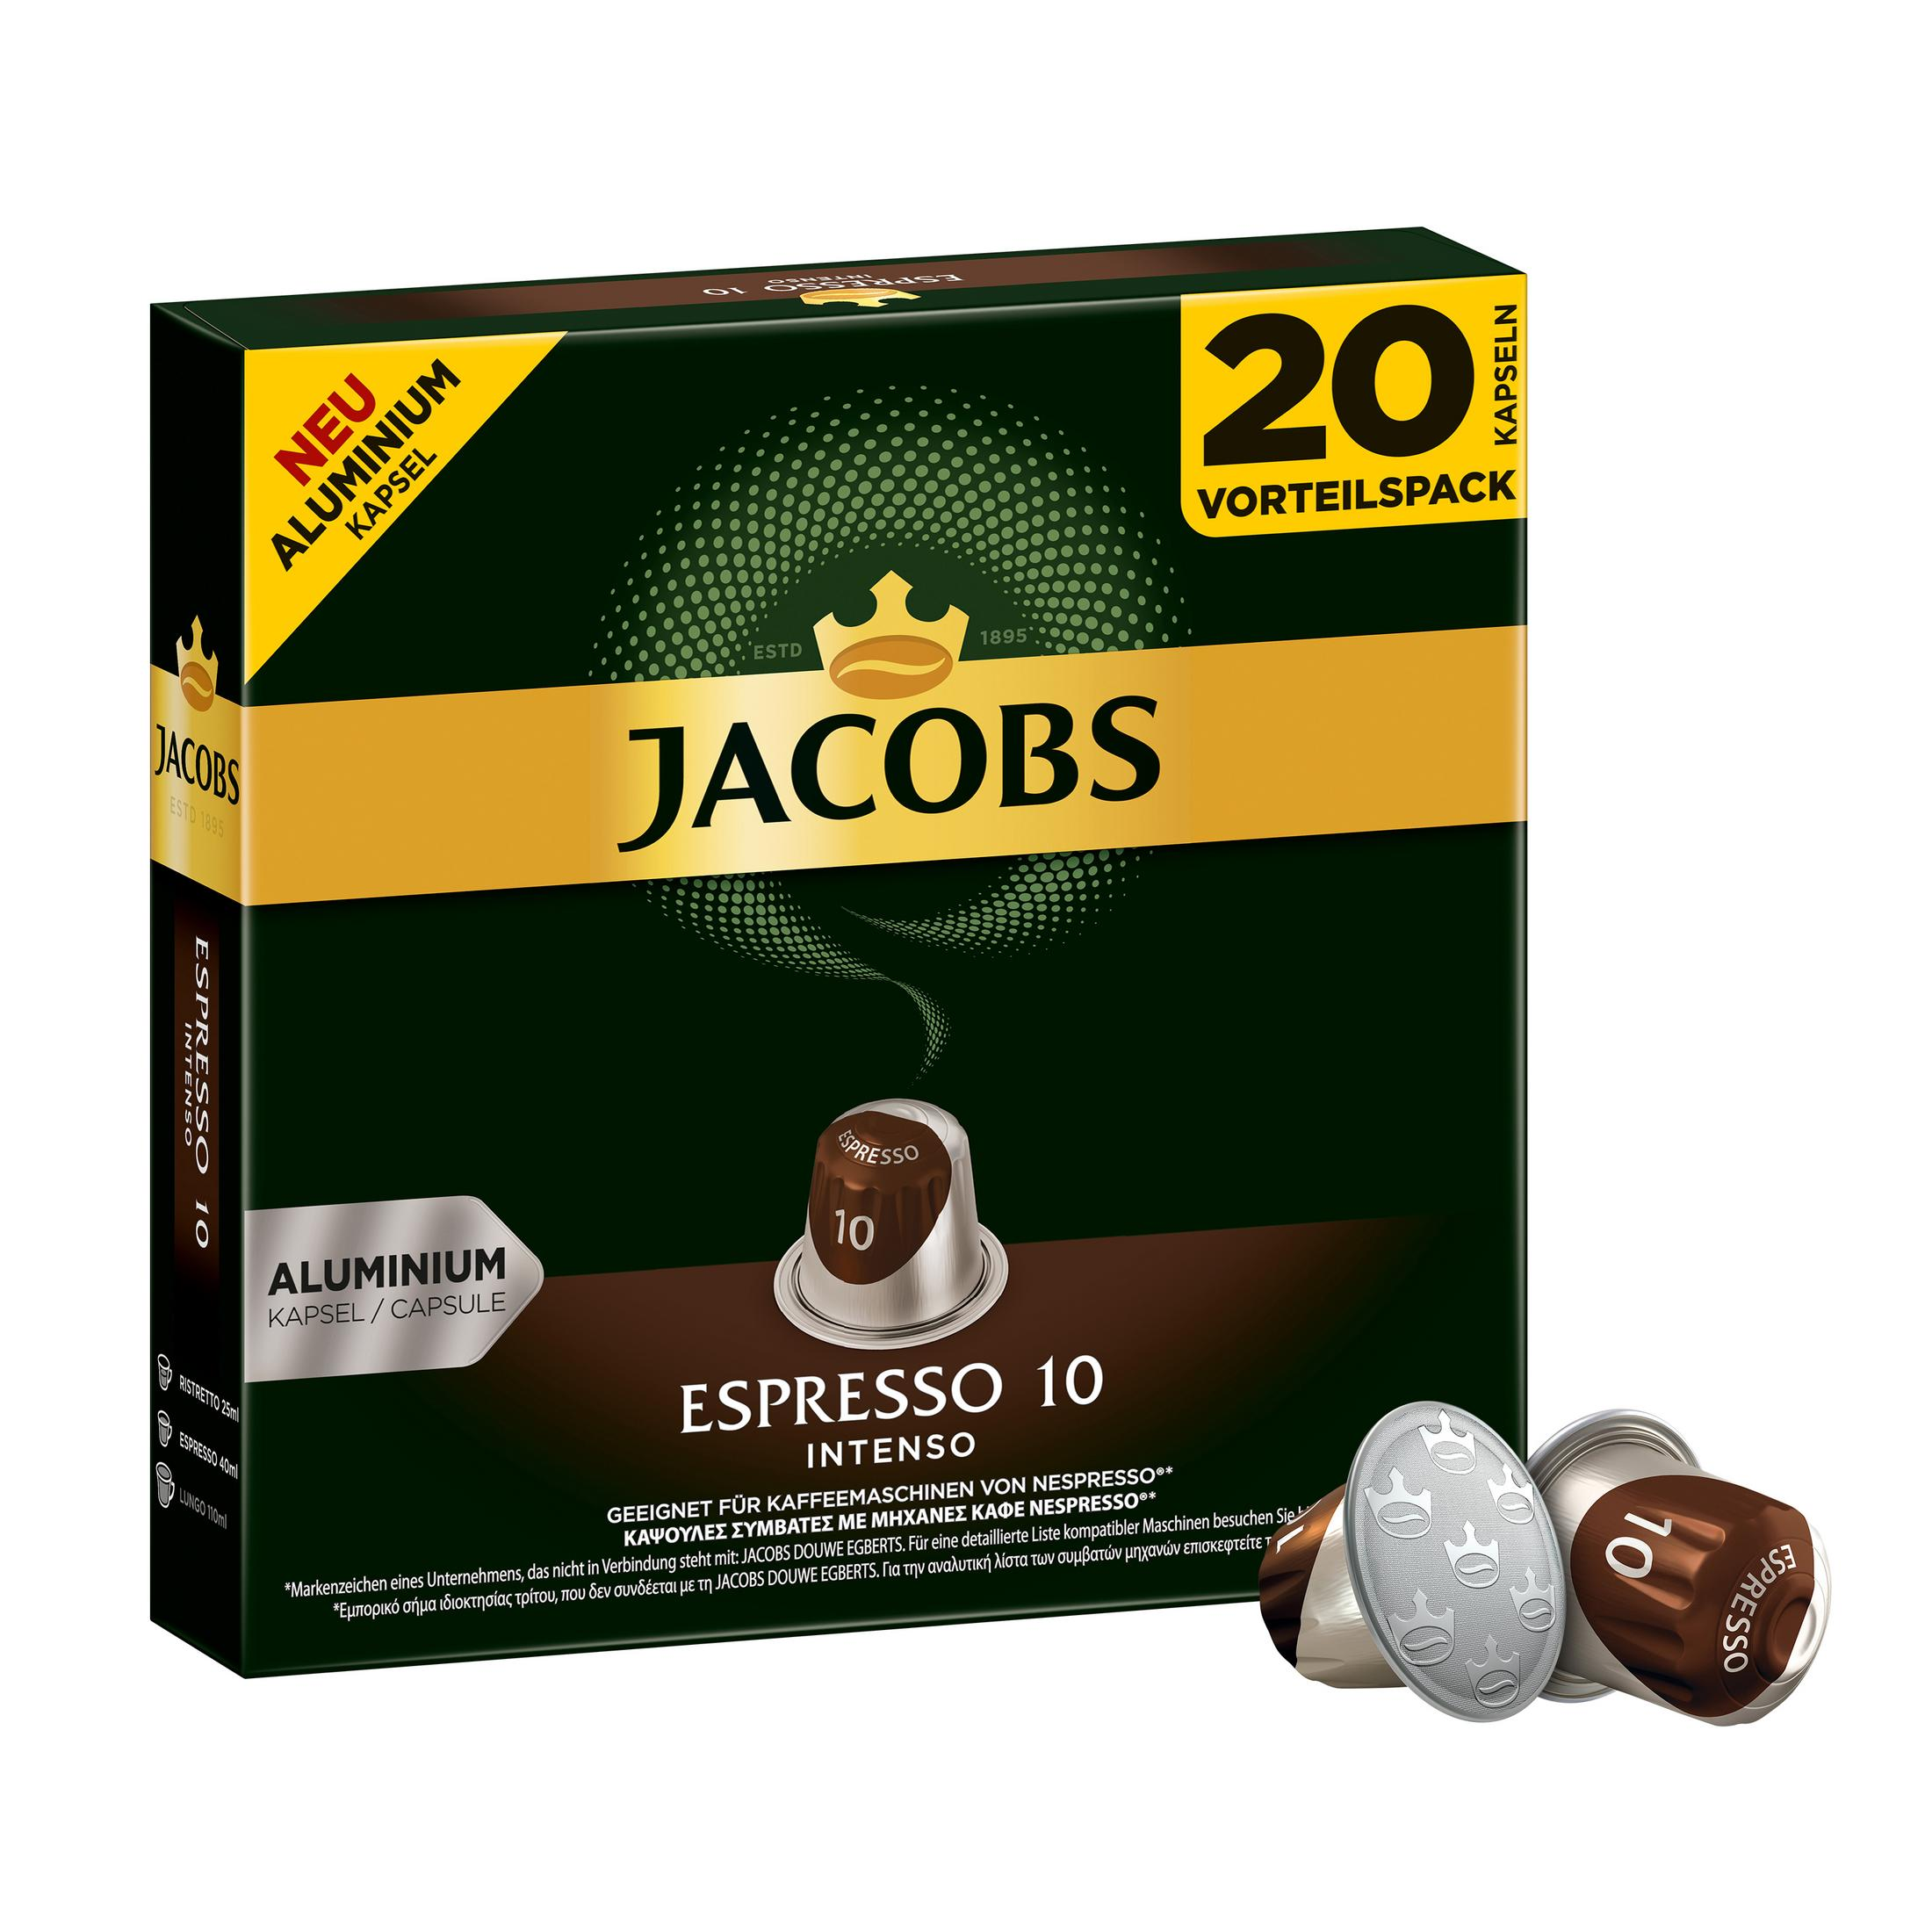 10 Kaffeekapseln INTENSO ESPRESSO JACOBS 20ER 4057019 (Nespresso)